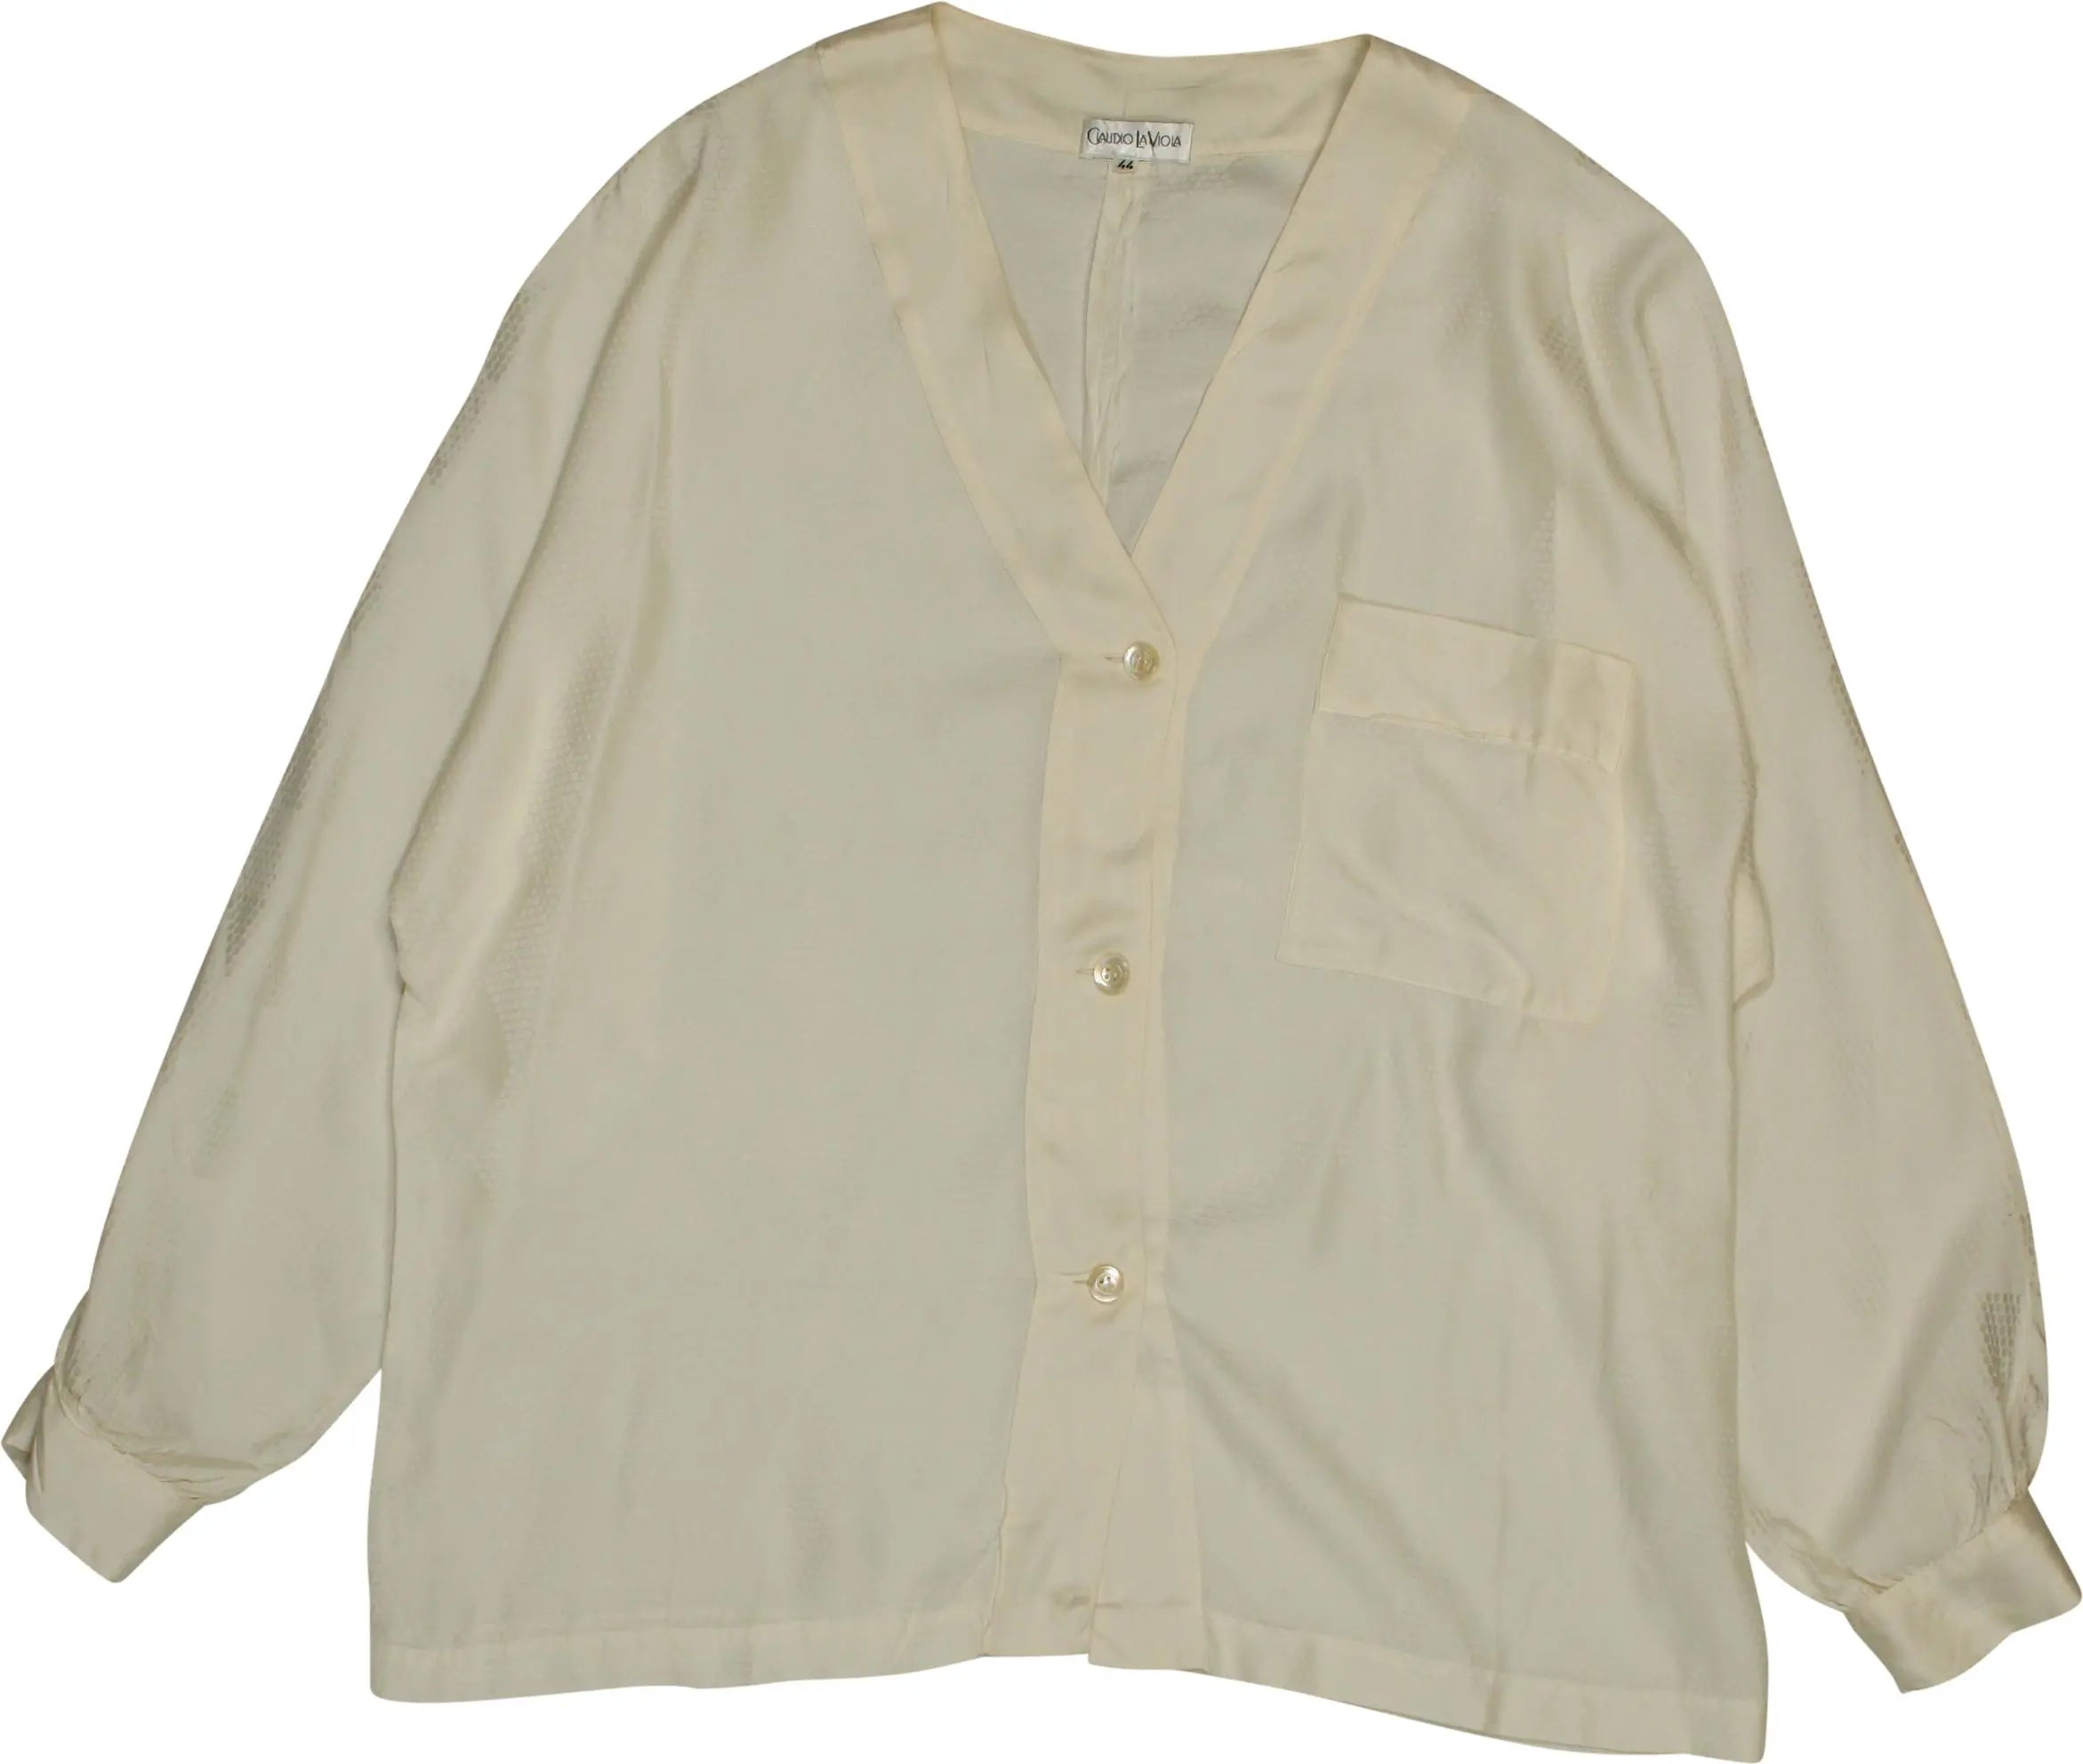 Claudio La Viola - Silk Shirt- ThriftTale.com - Vintage and second handclothing